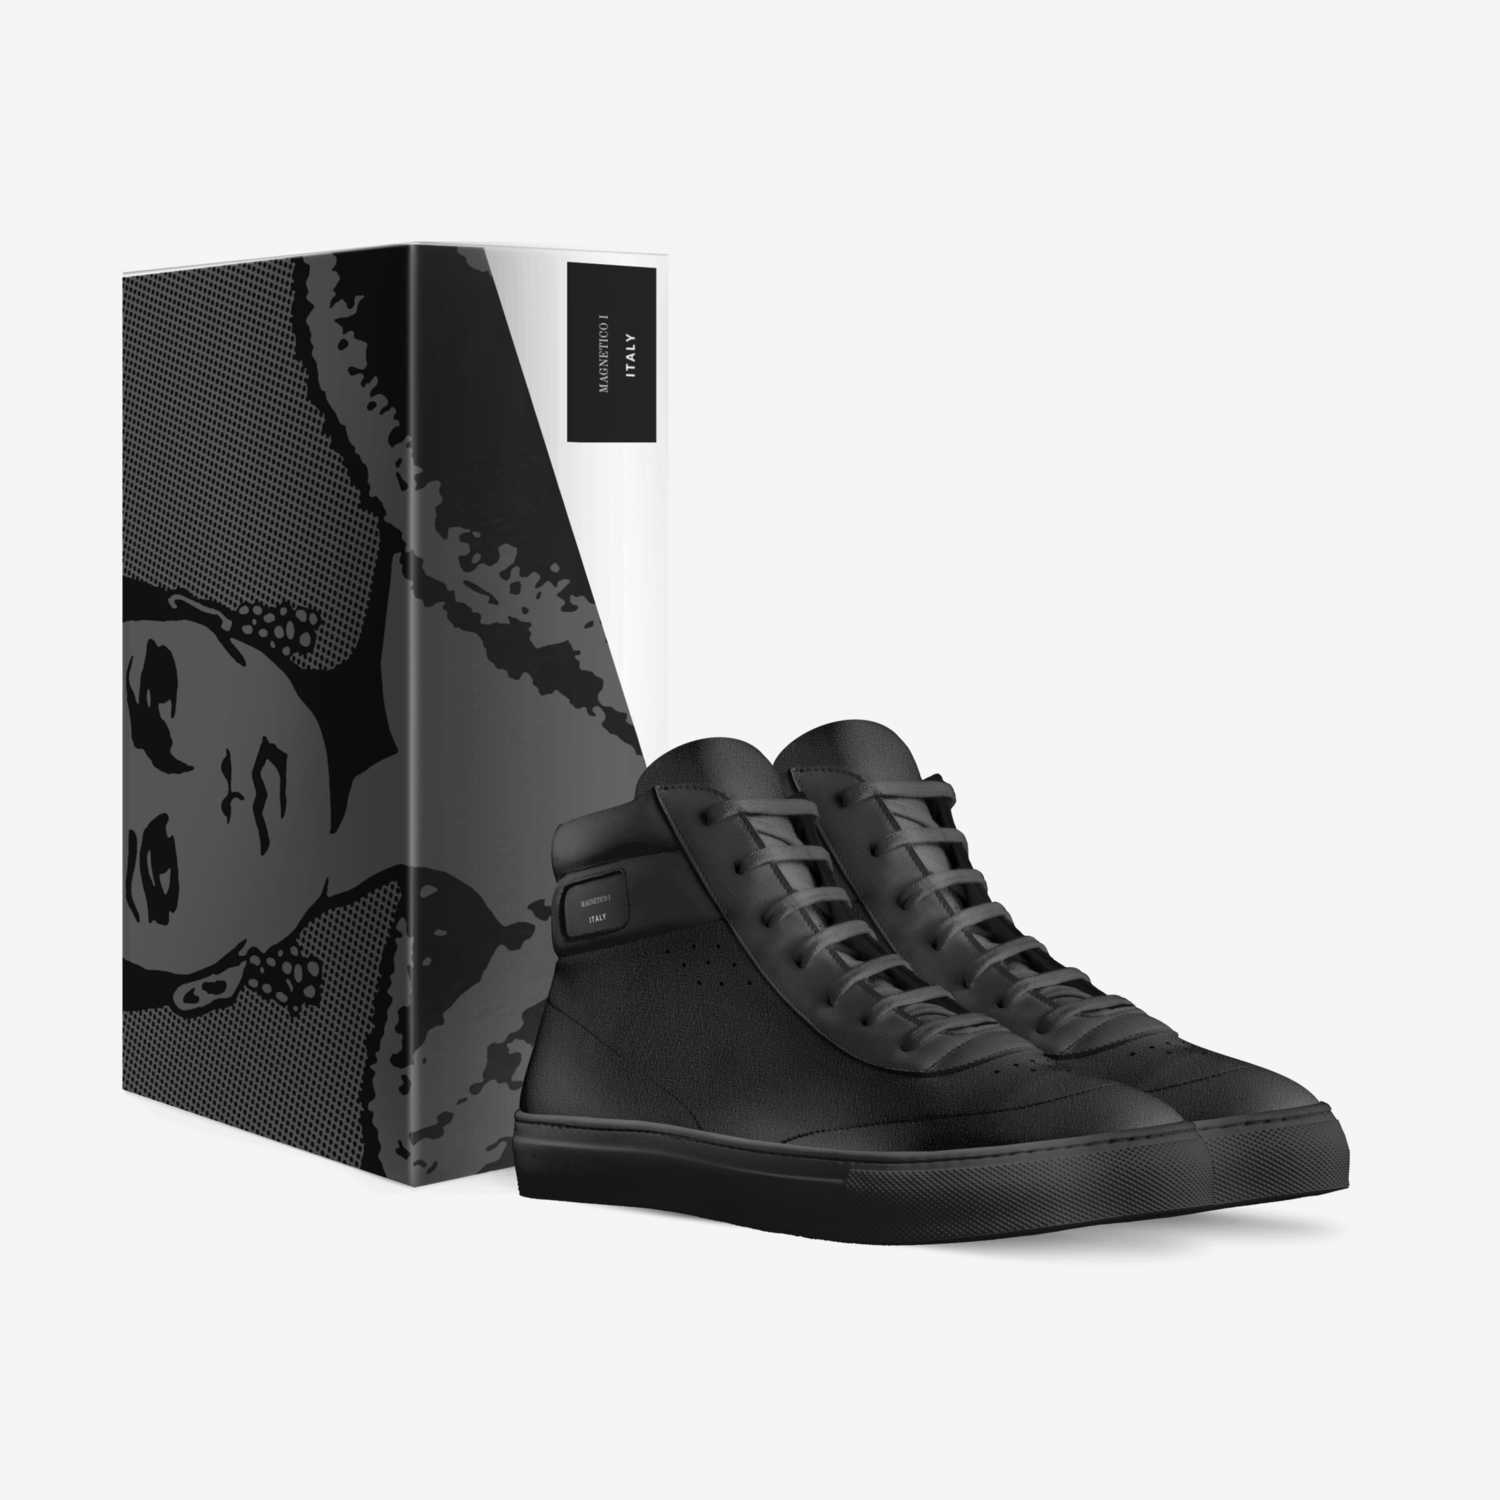 MAGNETICO I EBONY custom made in Italy shoes by Jesús Sandoval | Box view